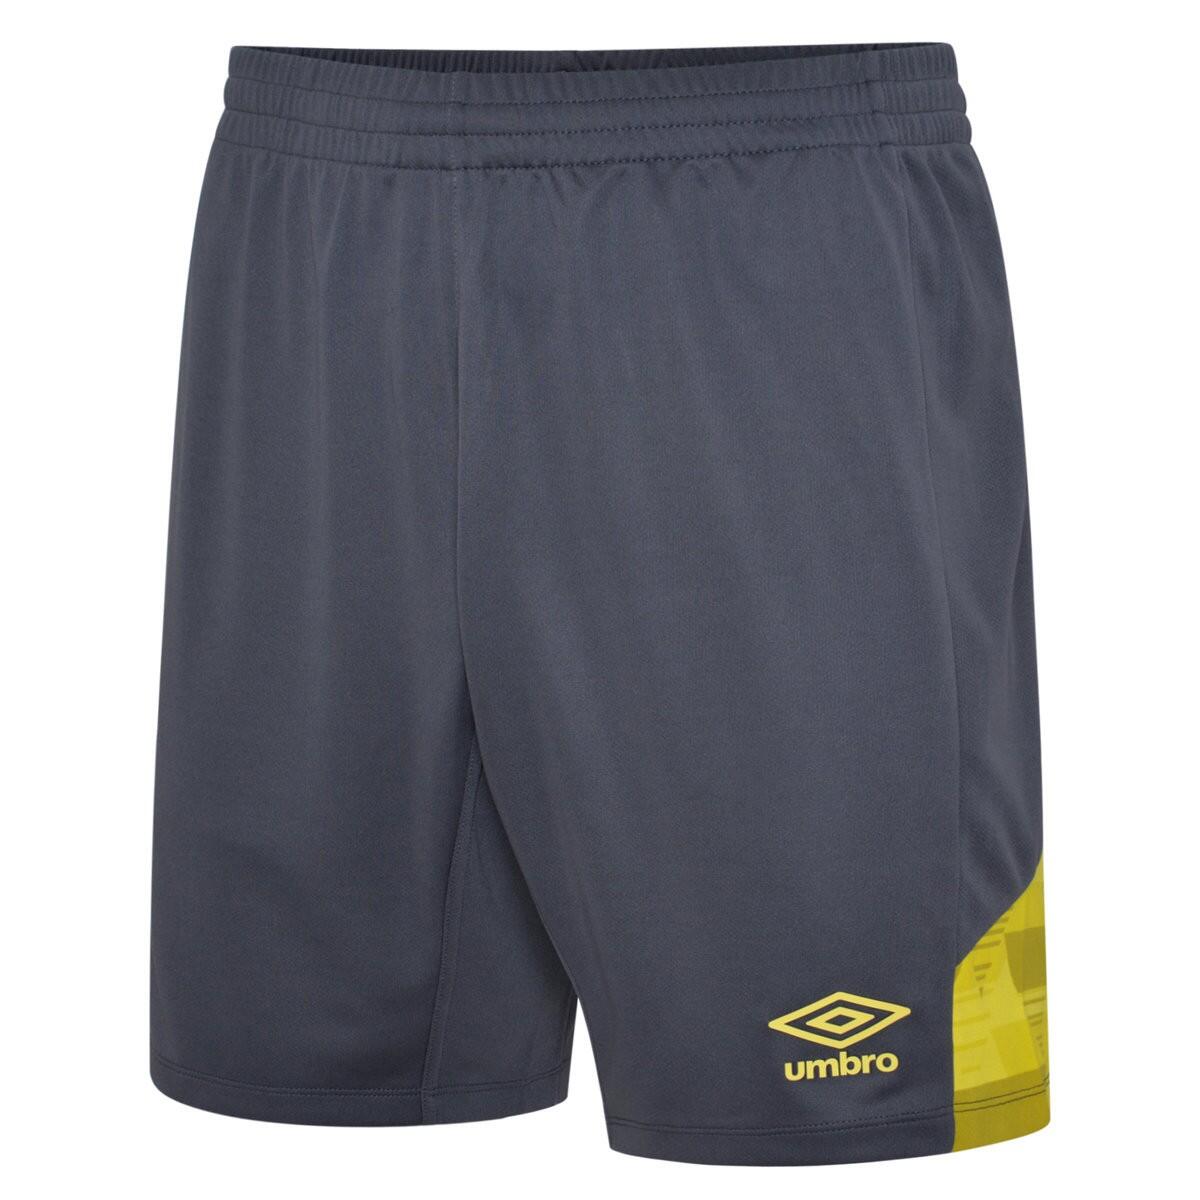 UMBRO Mens Vier Shorts (Carbon/Blazing Yellow)